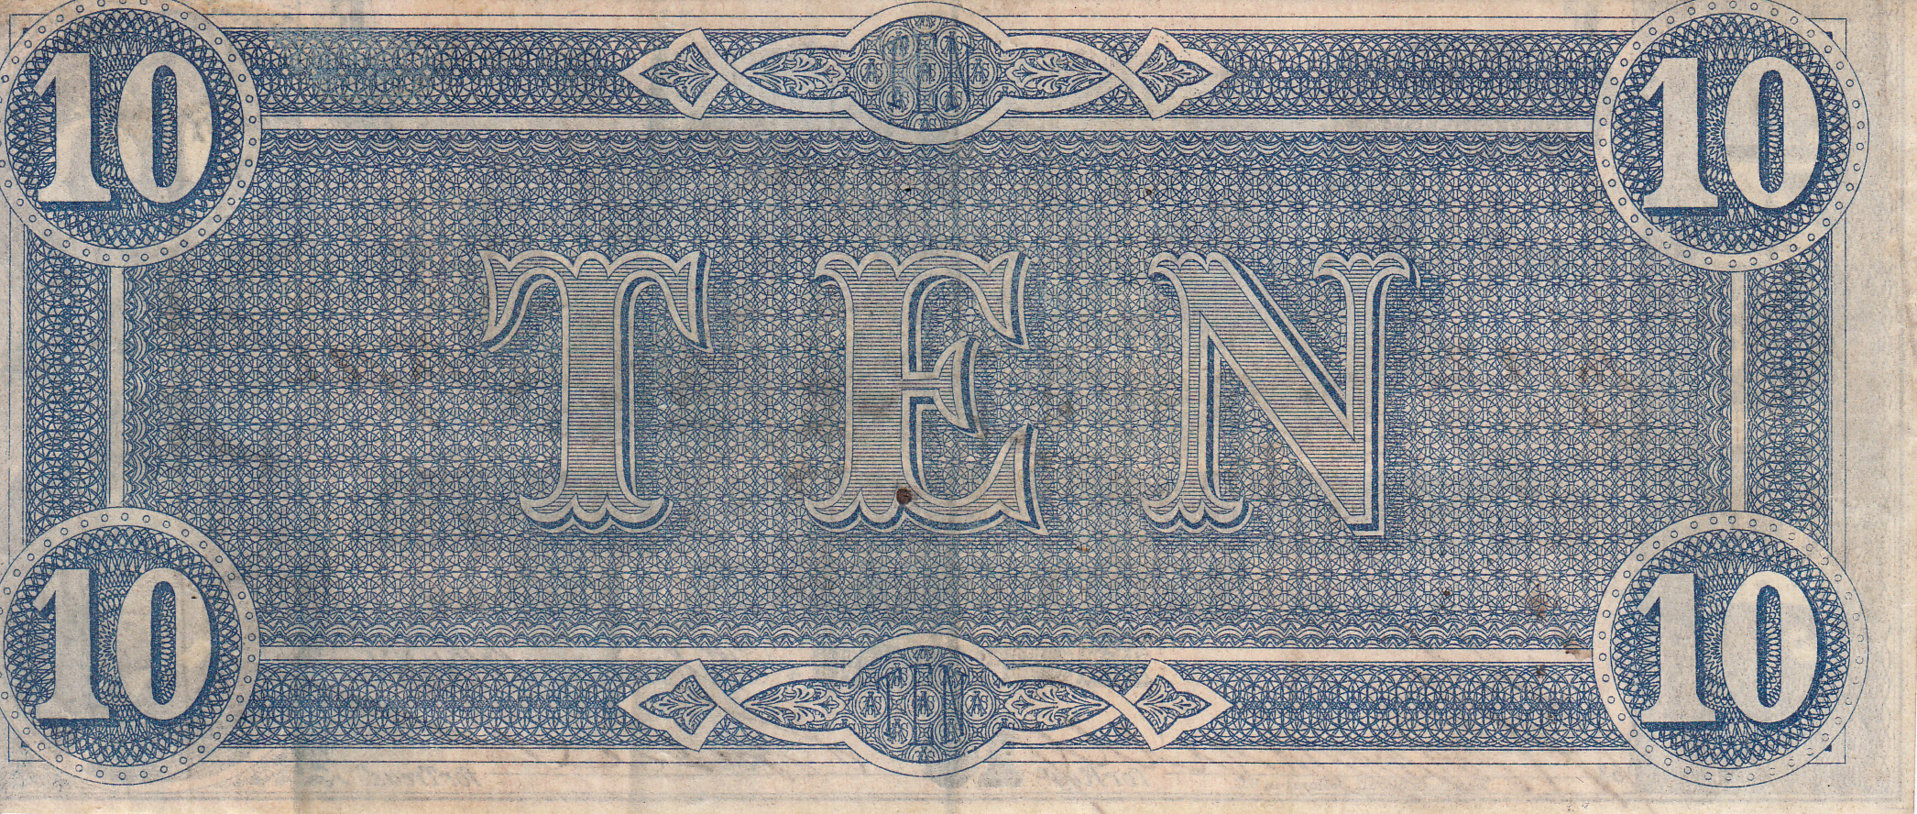 Доллары 1864г. Валюта t. 10 Yuan back Side.